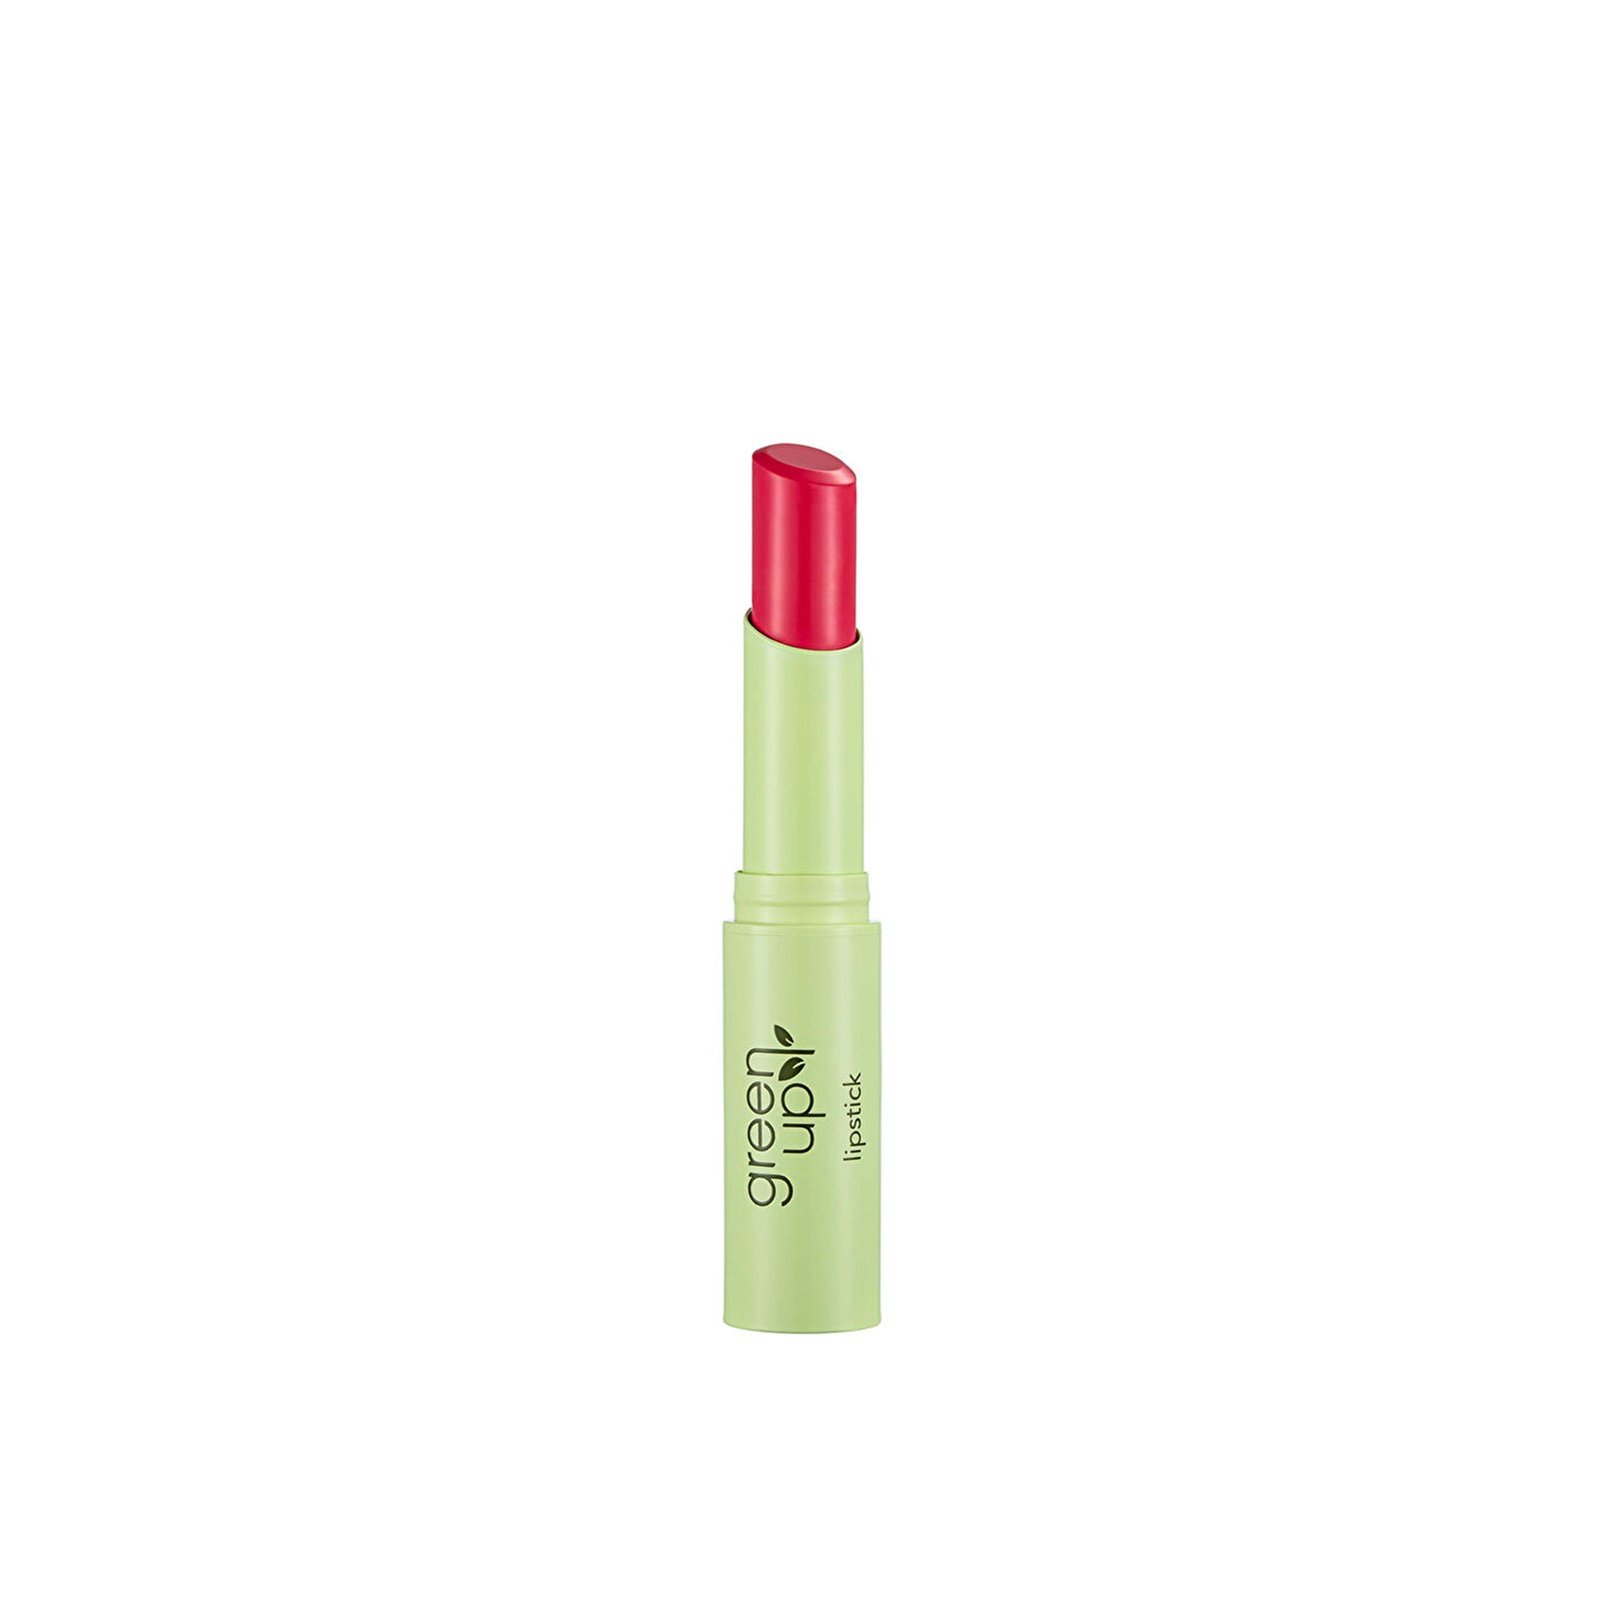 Flormar Green Up Lipstick 004 Wild Rose 3g (0.11 oz)